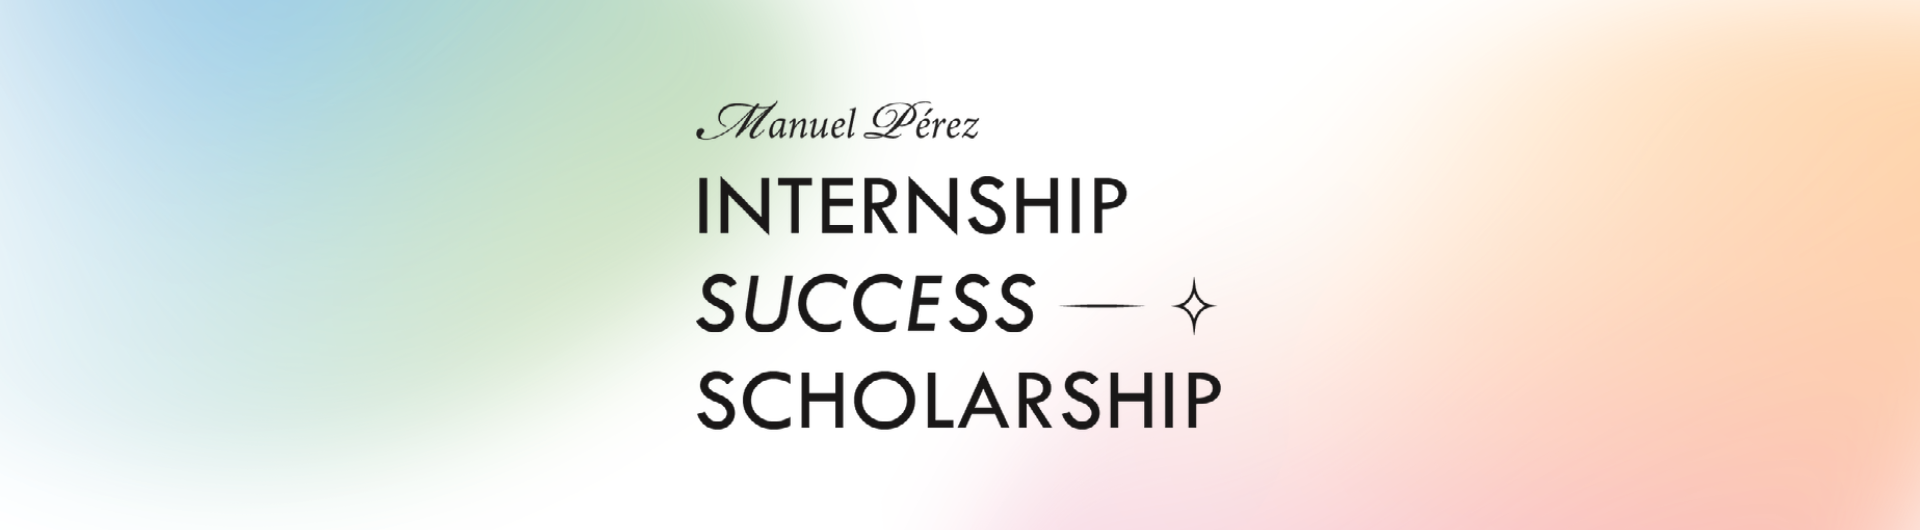 Manuel Perez Internship Success Scholarship